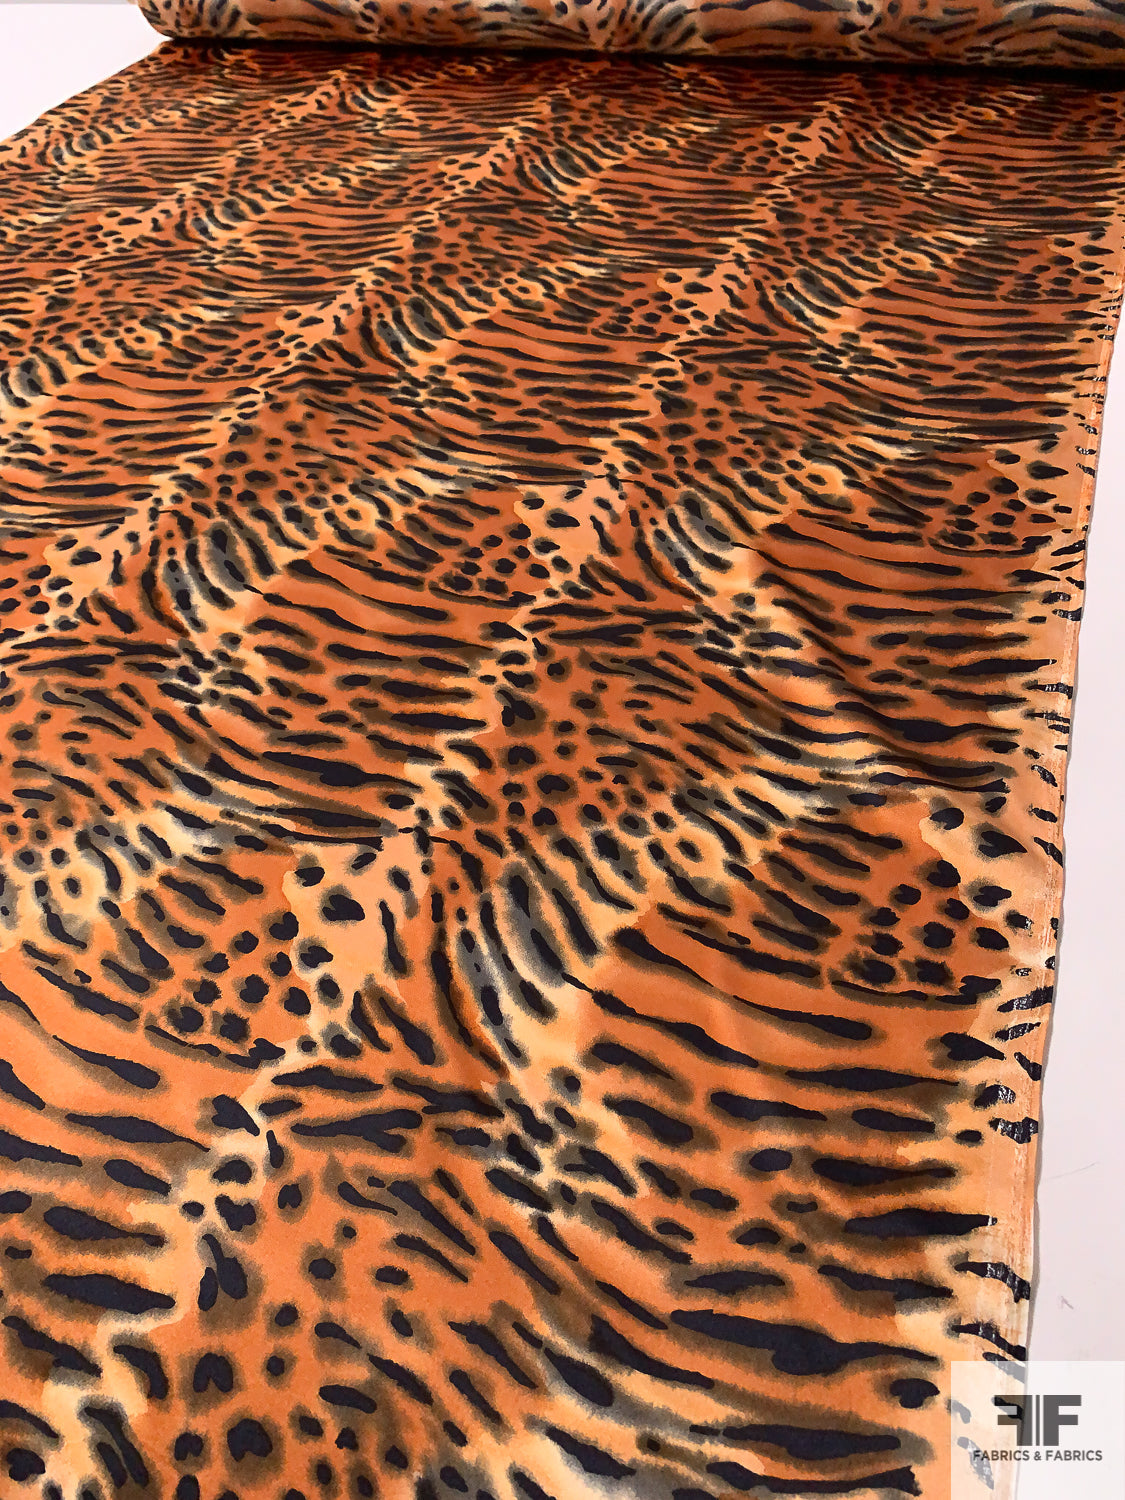 Animal Pattern Printed Silk Charmeuse - Burnt Orange / Black / Taupe